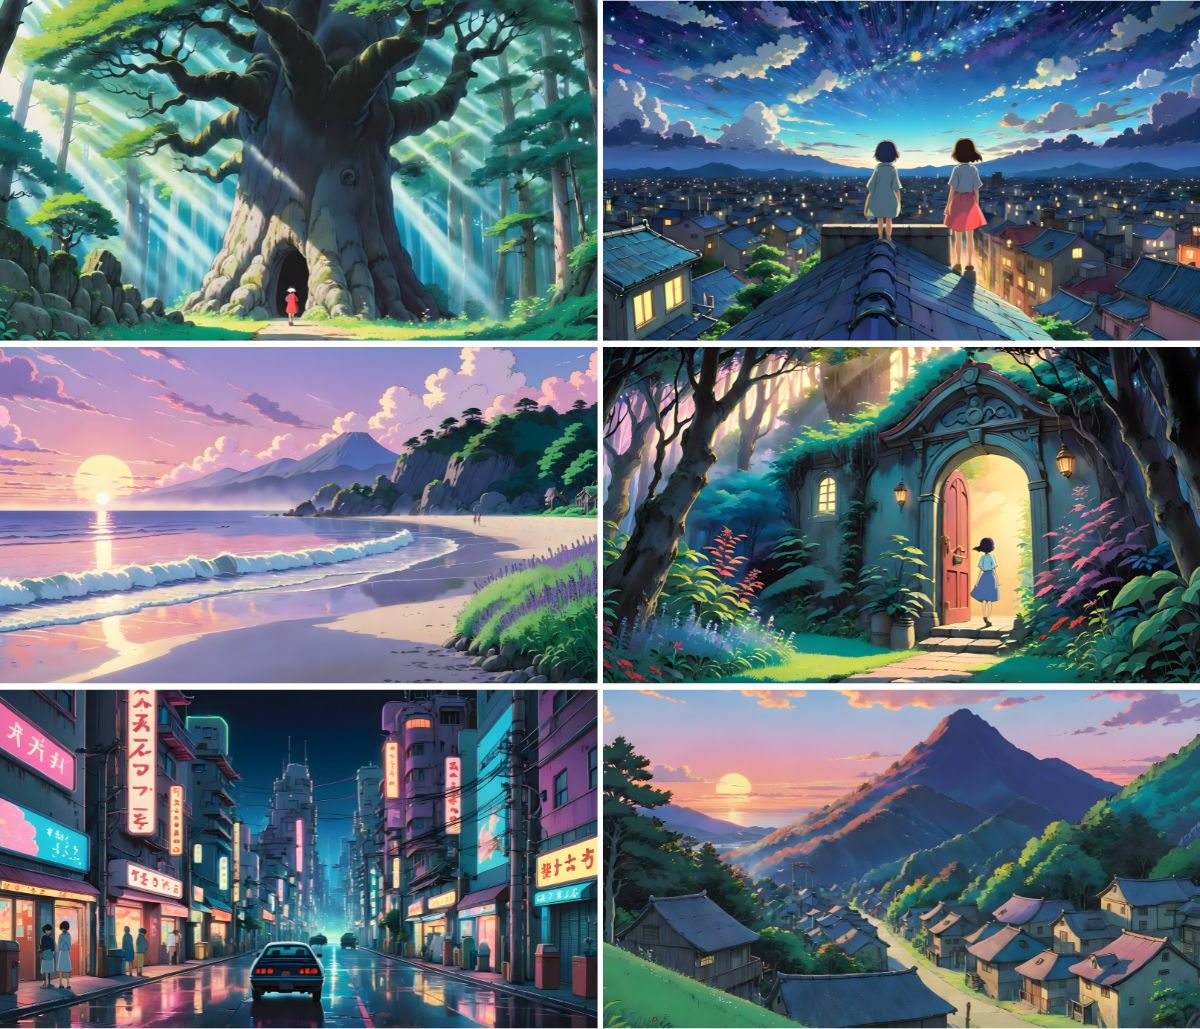 Ghibli landscapes